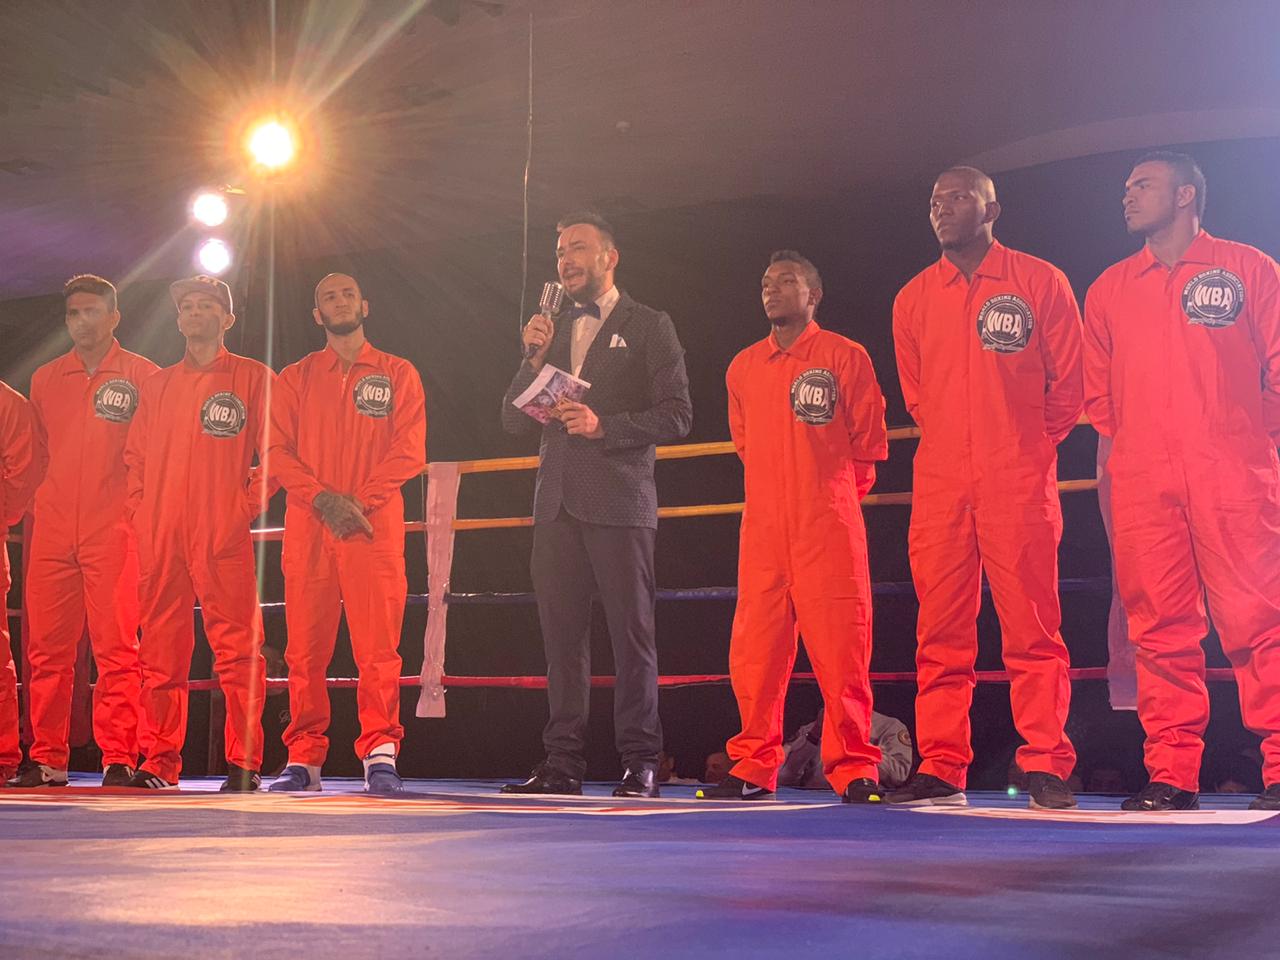 Underground Boxing starts in style in Barranquilla